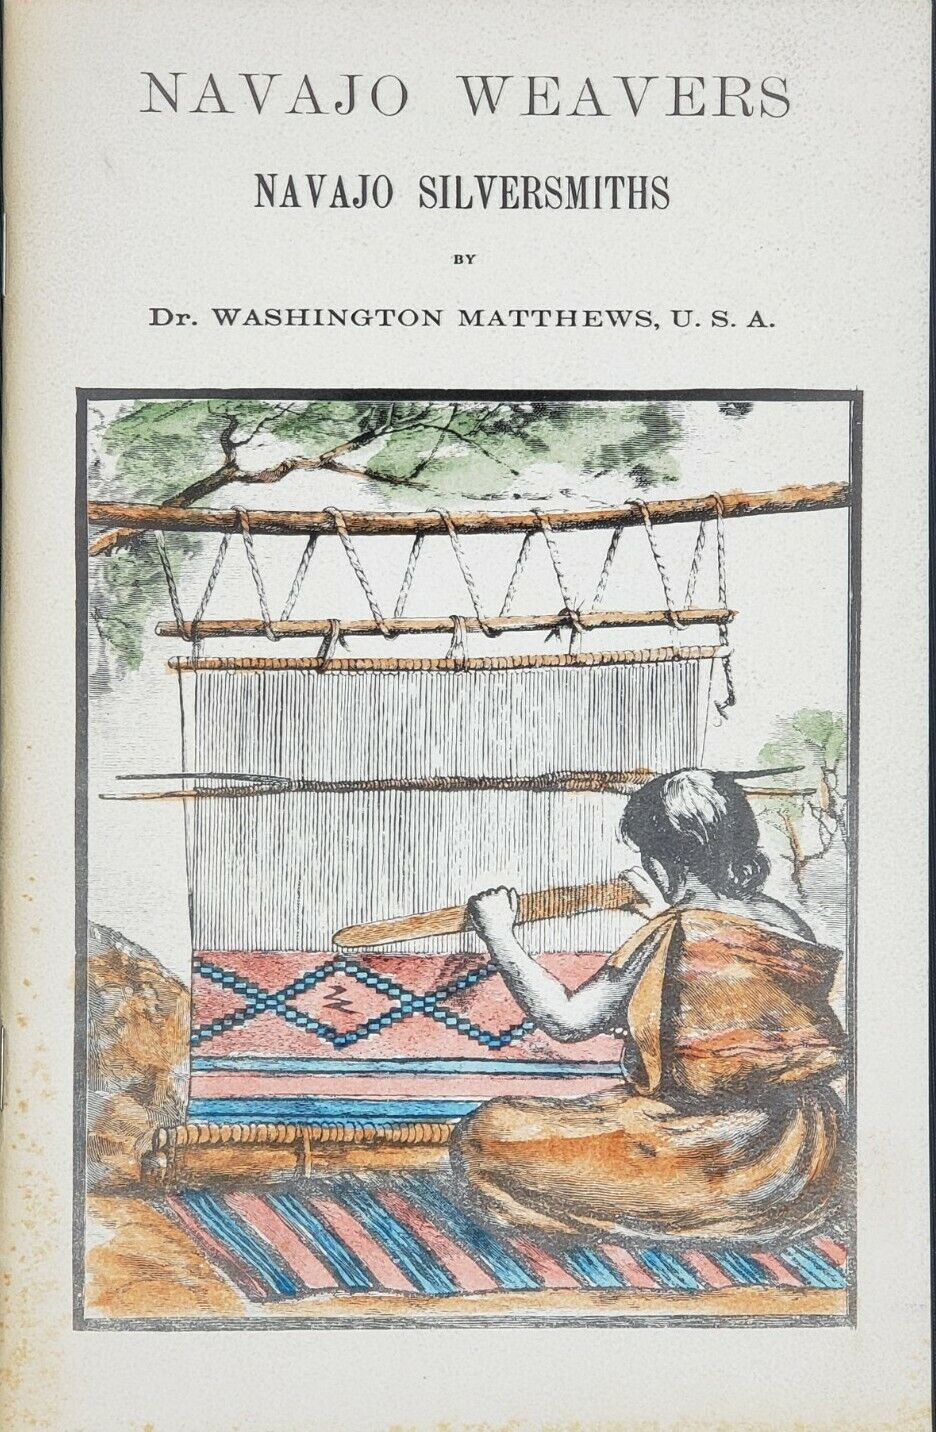 1968 Navajo Weavers, Silversmiths, by Washington Matthews - Native American Book